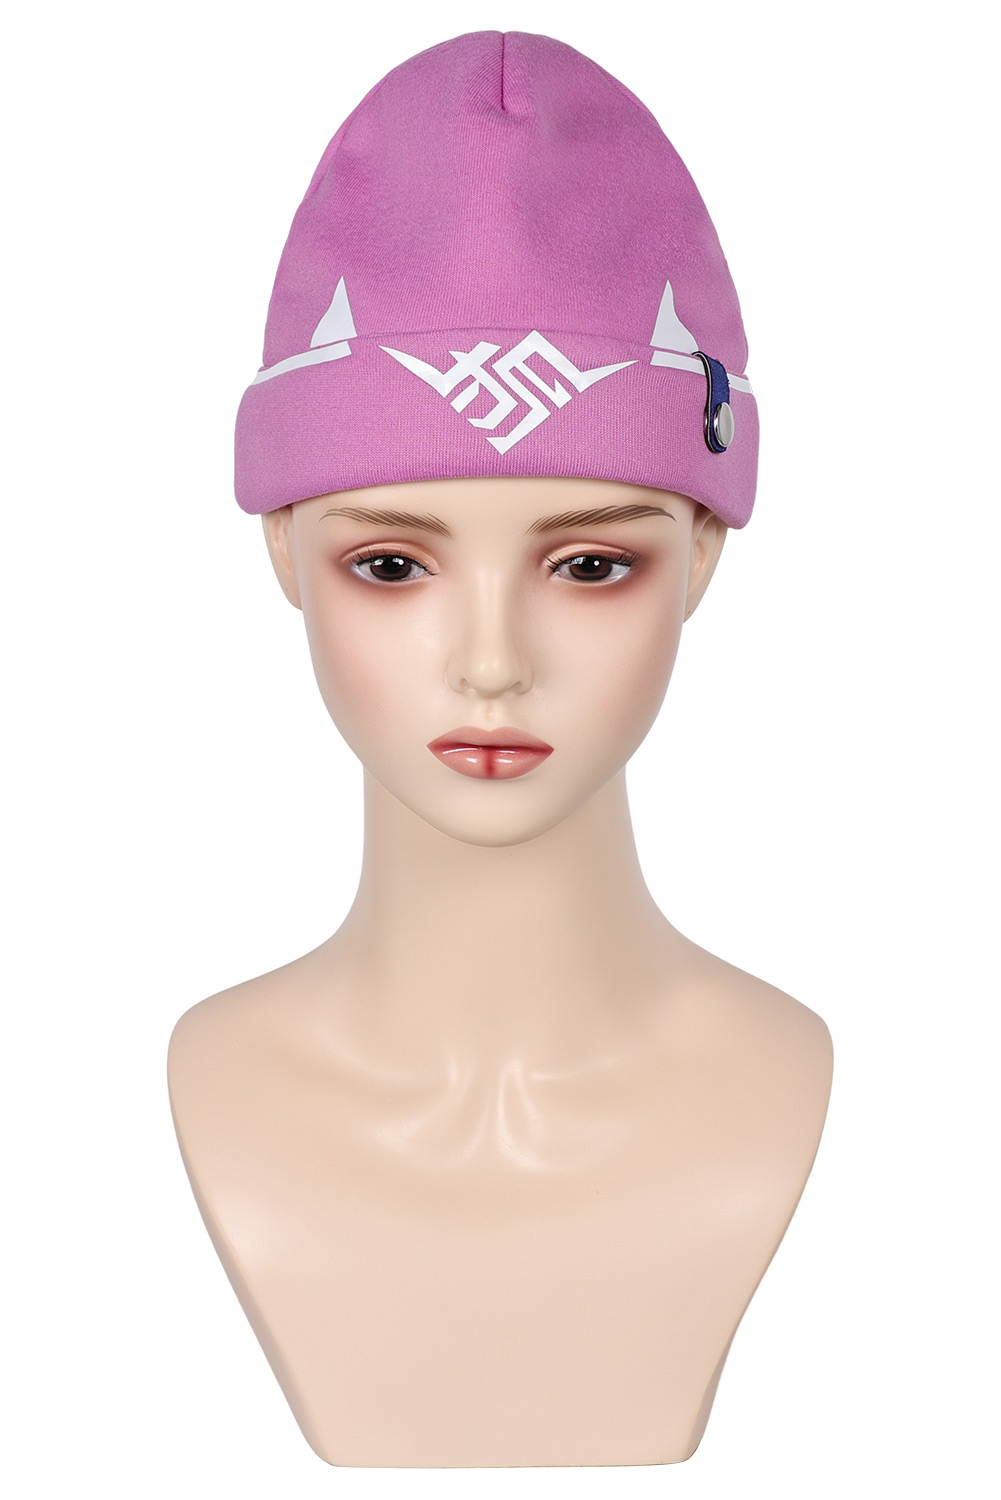 Game Overwatch Kiriko Cosplay Pink Knitted Hat Halloween Carnival Costume Accessories